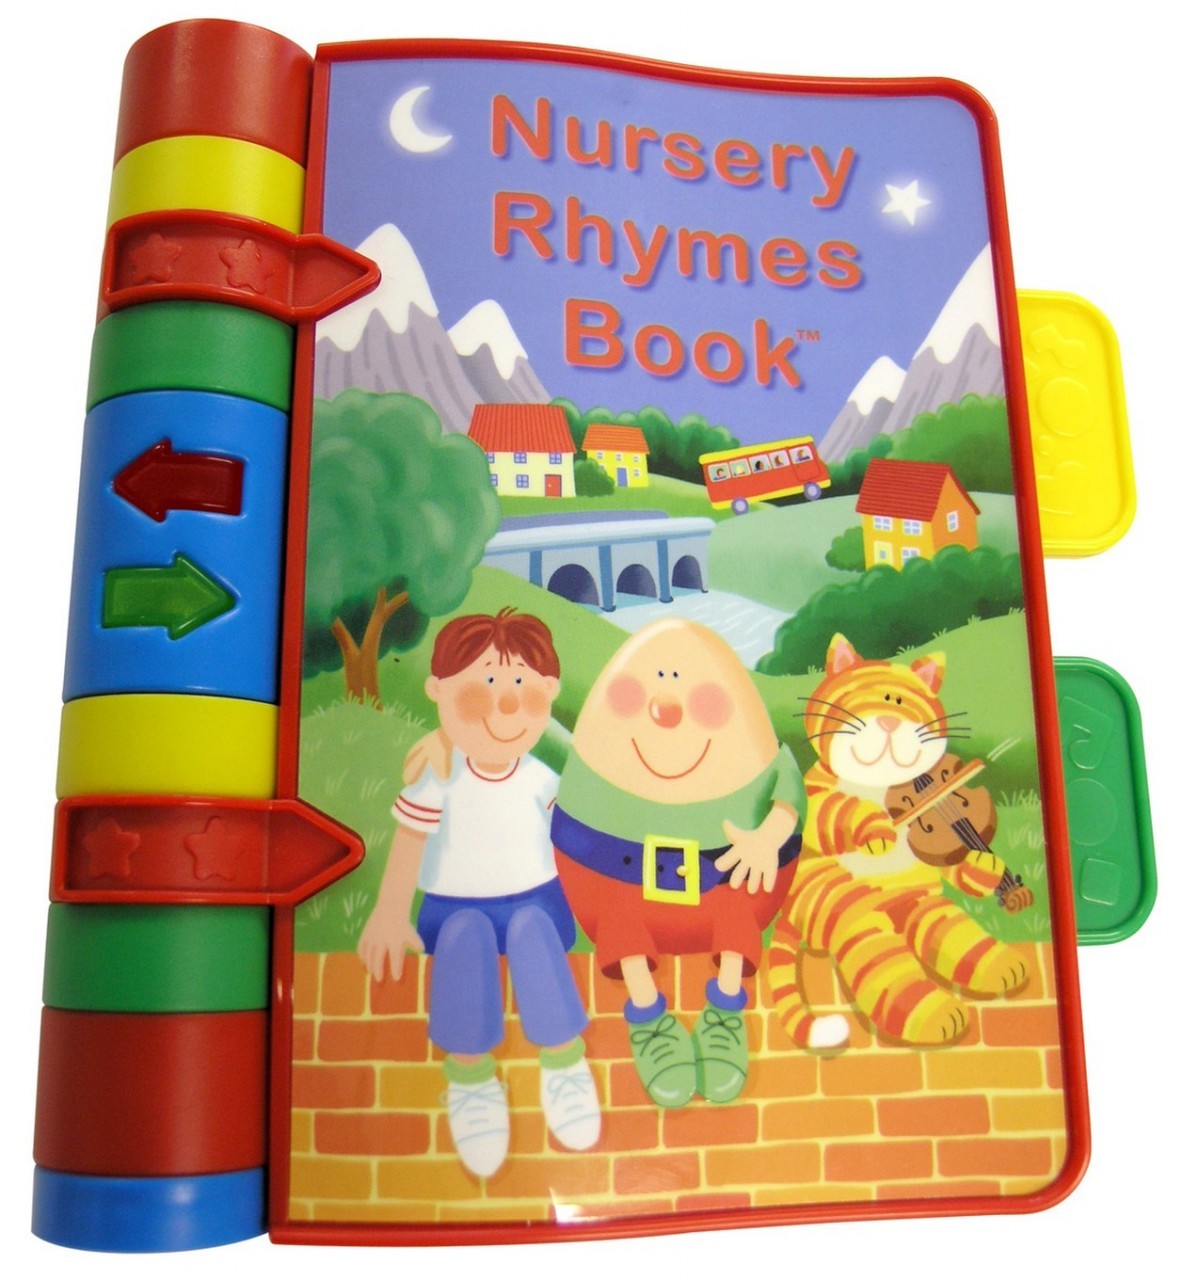 VTech Nursery Rhymes Book, 80-064703